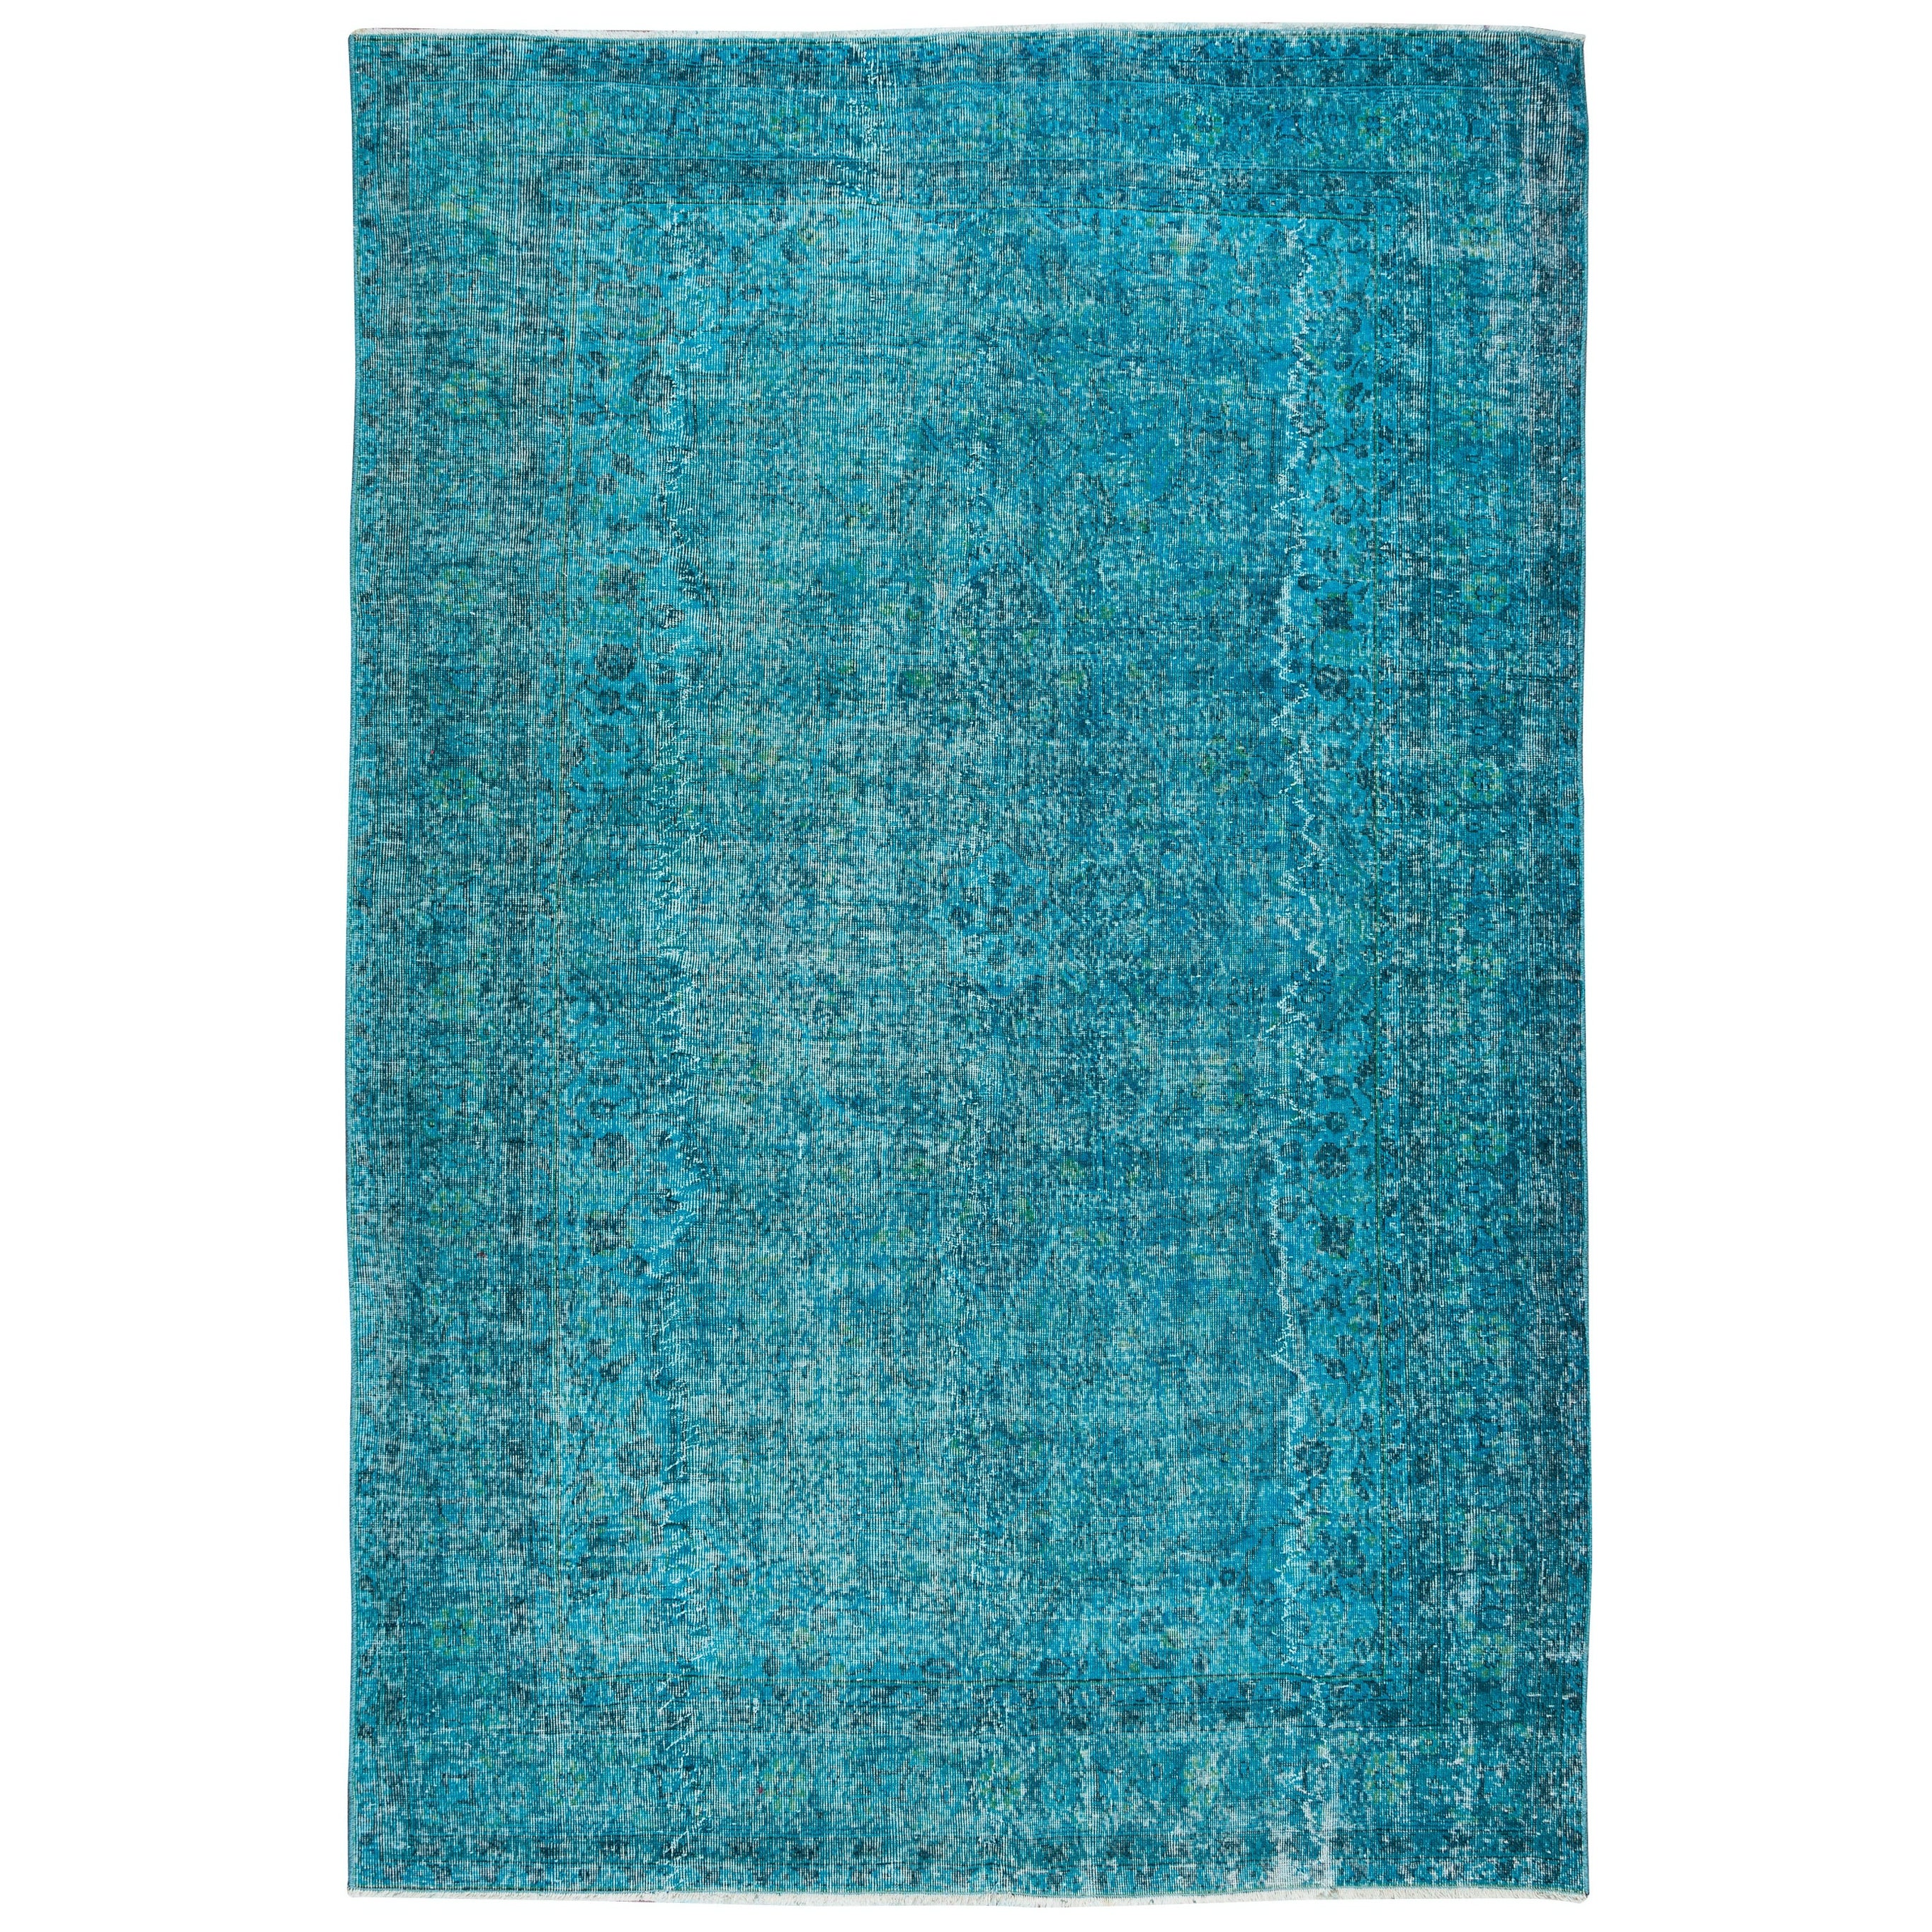 6.7x10 Ft Handmade Vintage Anatolian Carpet, Teal Blue Rug for Modern Interiors (tapis bleu sarcelle pour intérieurs modernes)